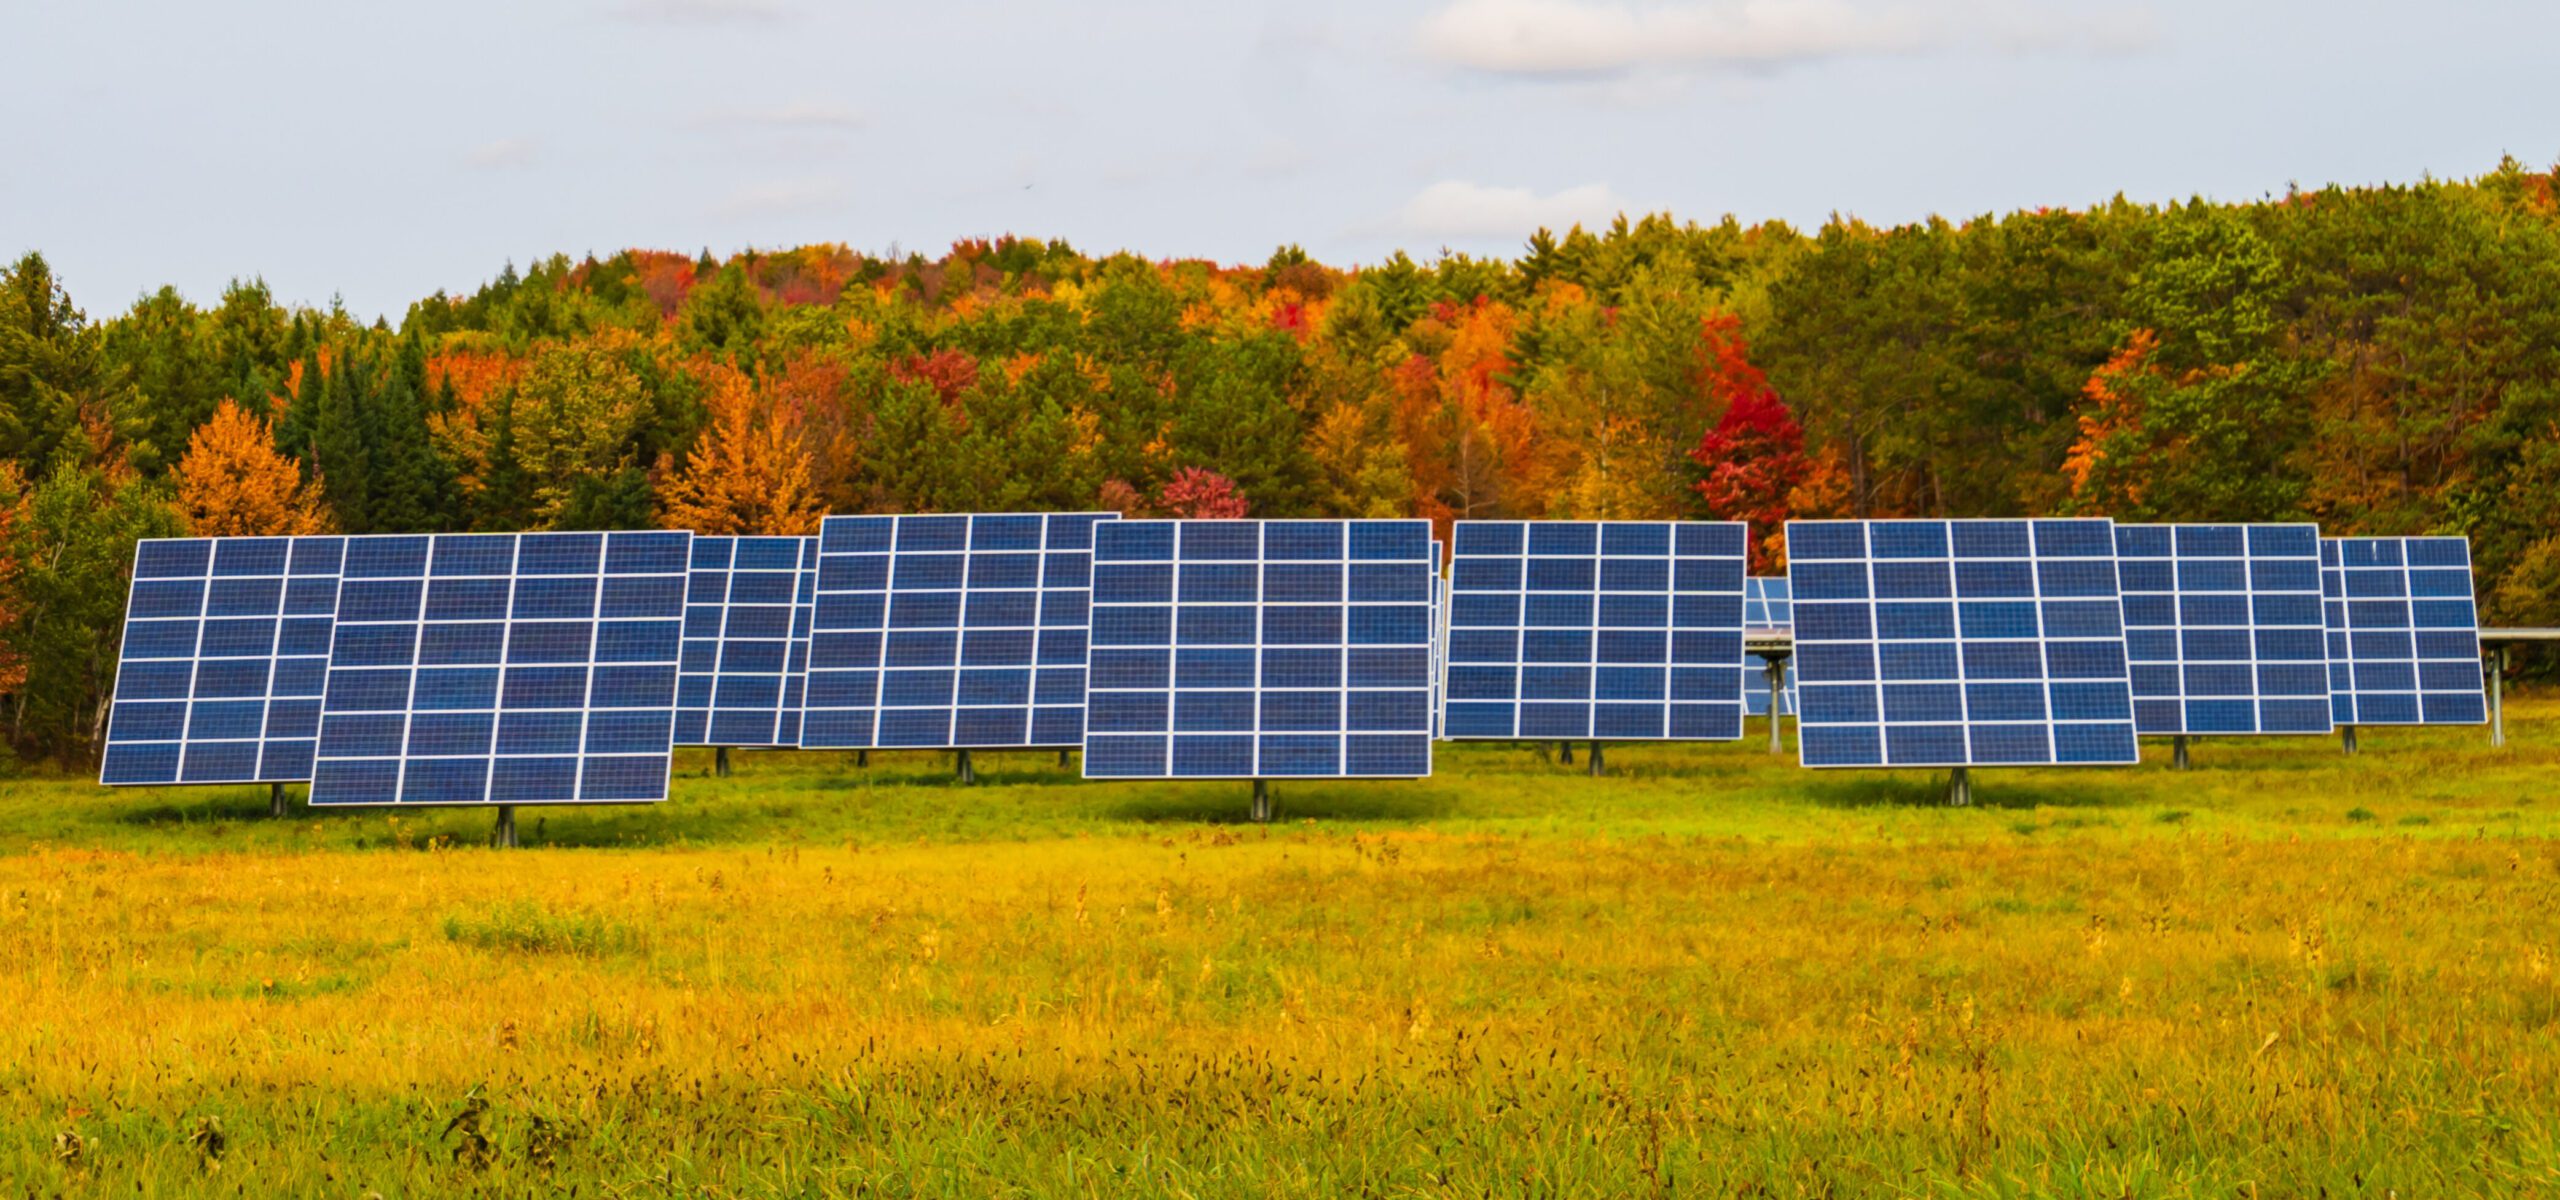 Solar panels in an autumn field.